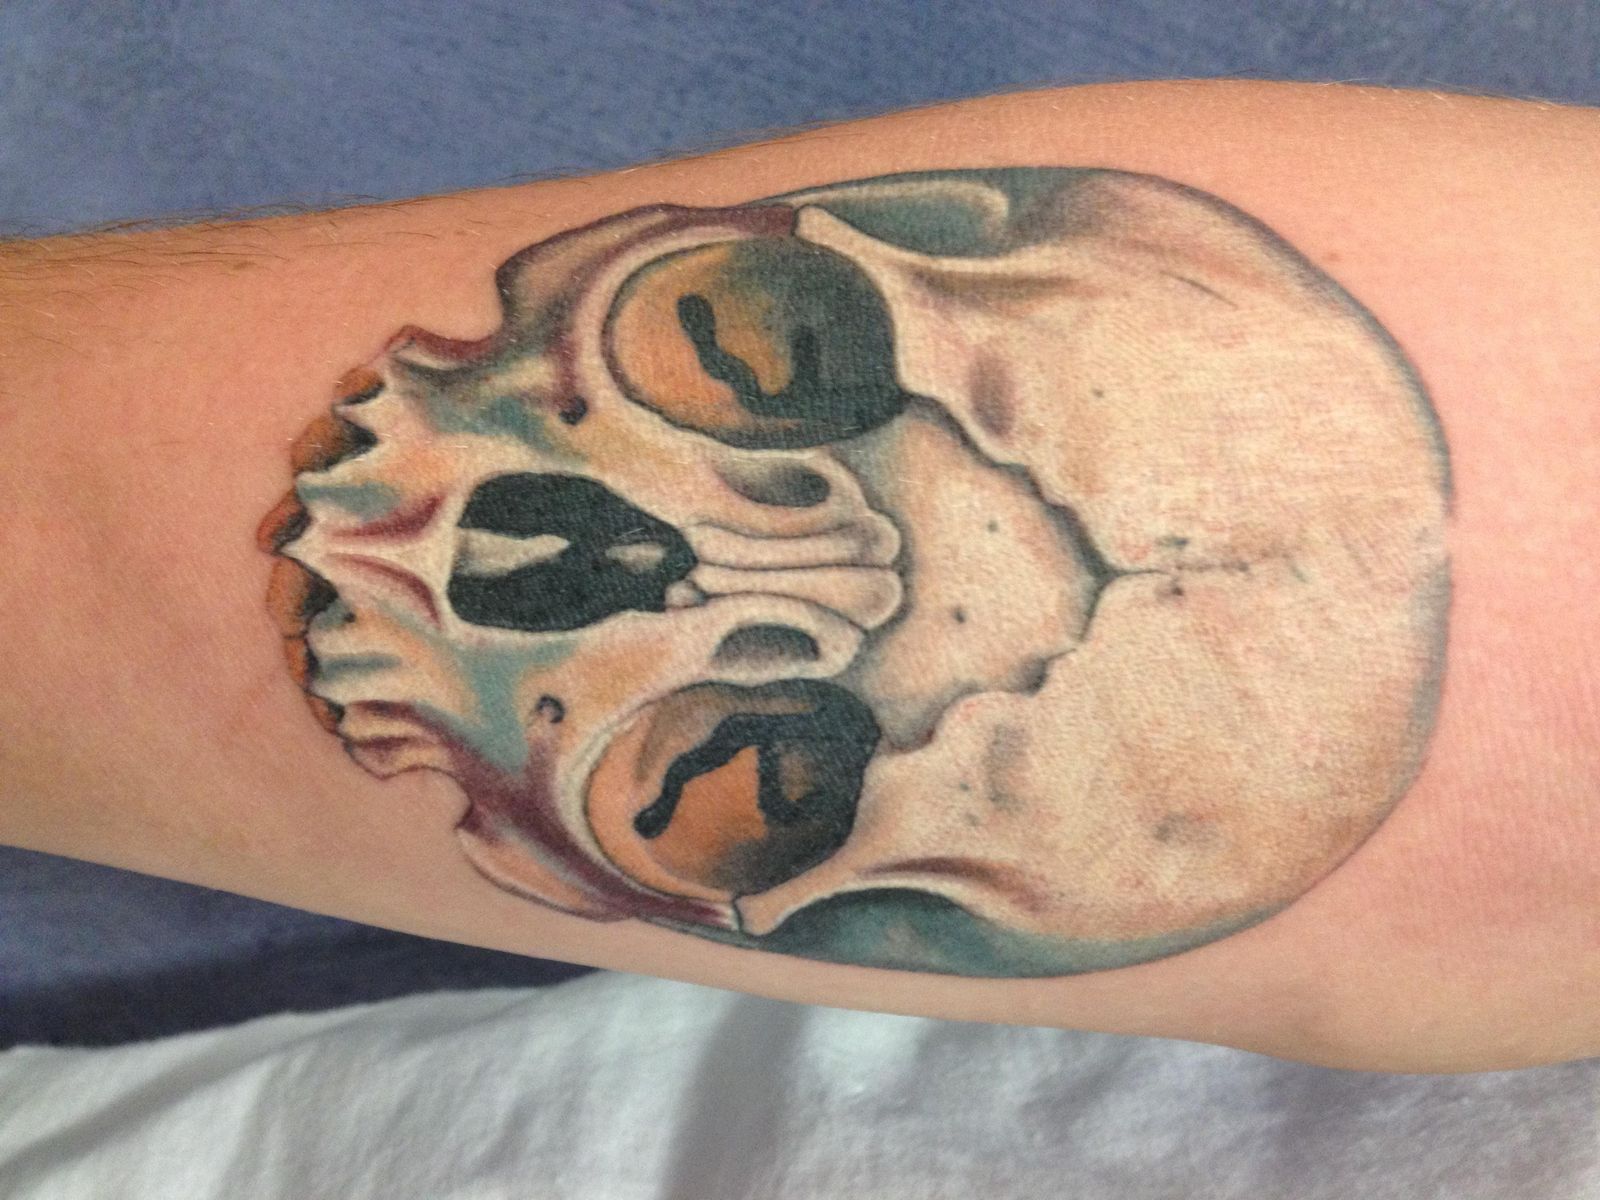 Stunning Tattoo Cover Up by Darren Brauders